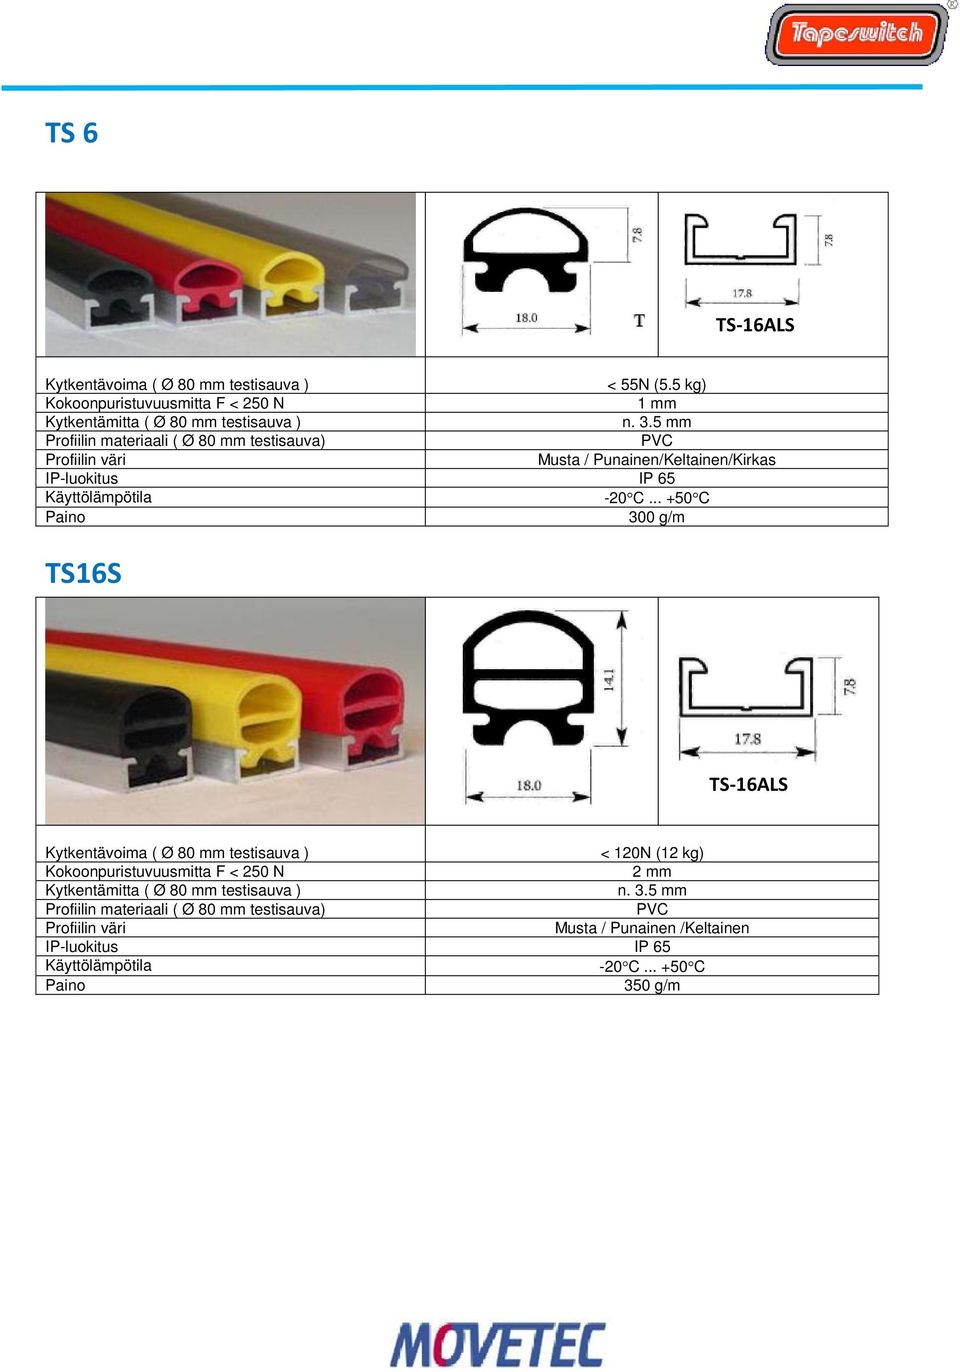 5 mm PVC / Punainen/Keltainen/Kirkas 300 g/m